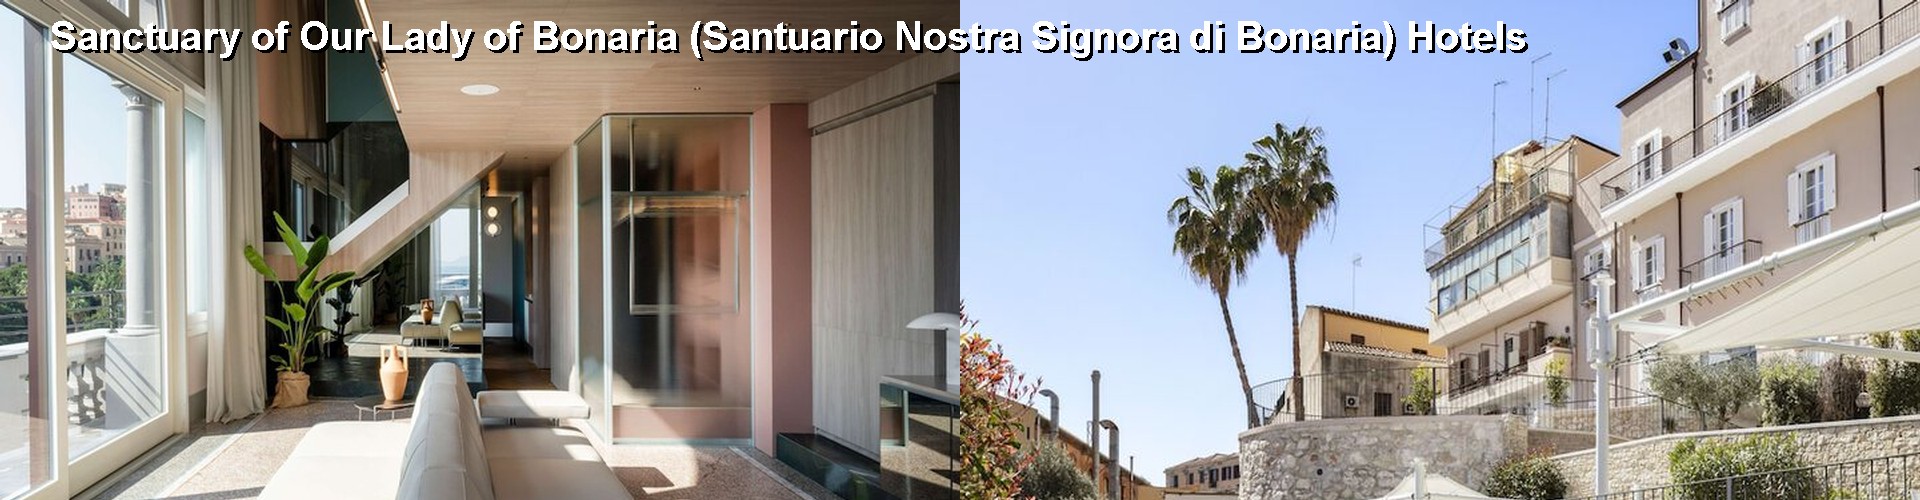 5 Best Hotels near Sanctuary of Our Lady of Bonaria (Santuario Nostra Signora di Bonaria)